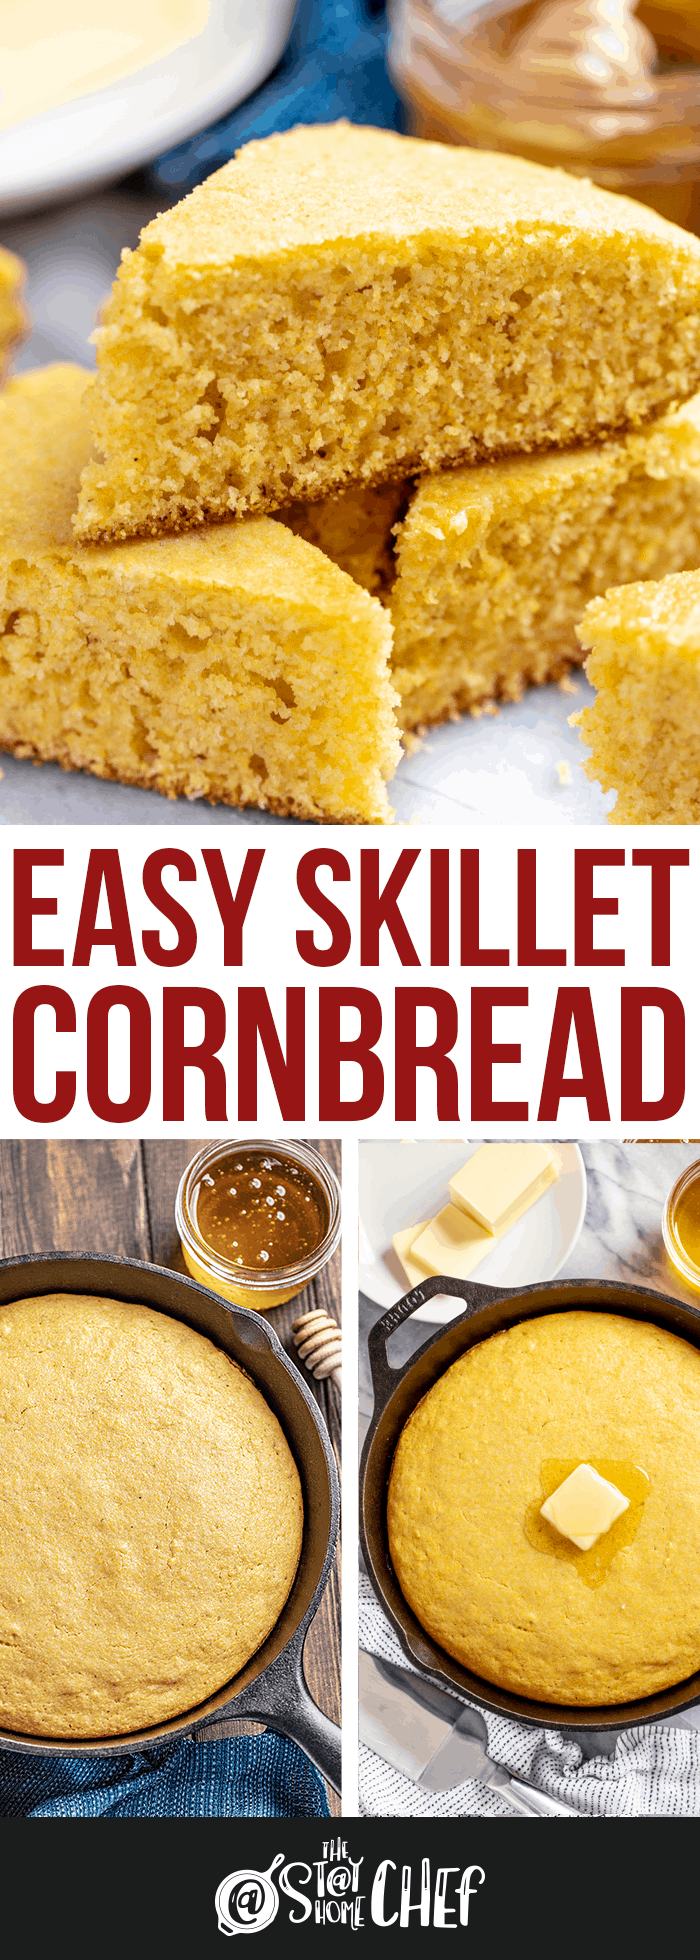 Easy Skillet Cornbread